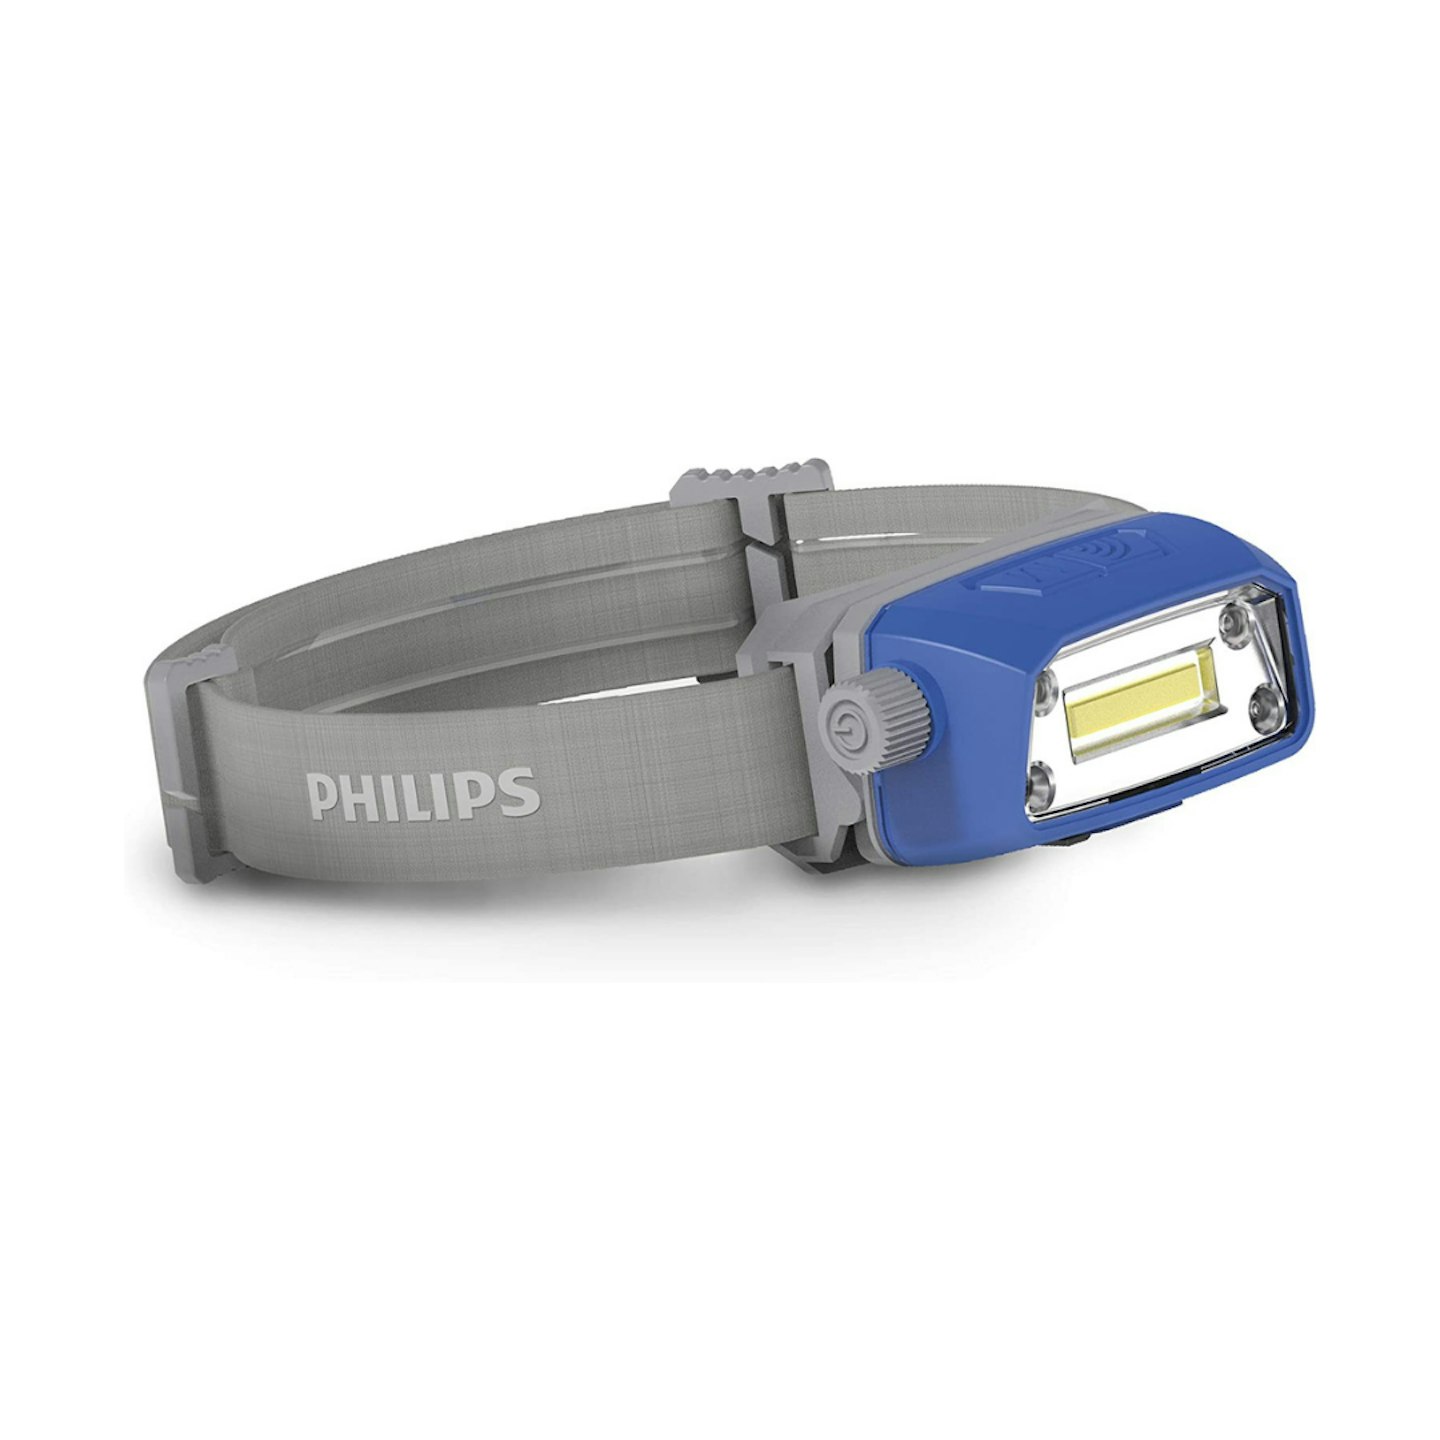 Philips LPL74X1 LED Head Torch Headlamp